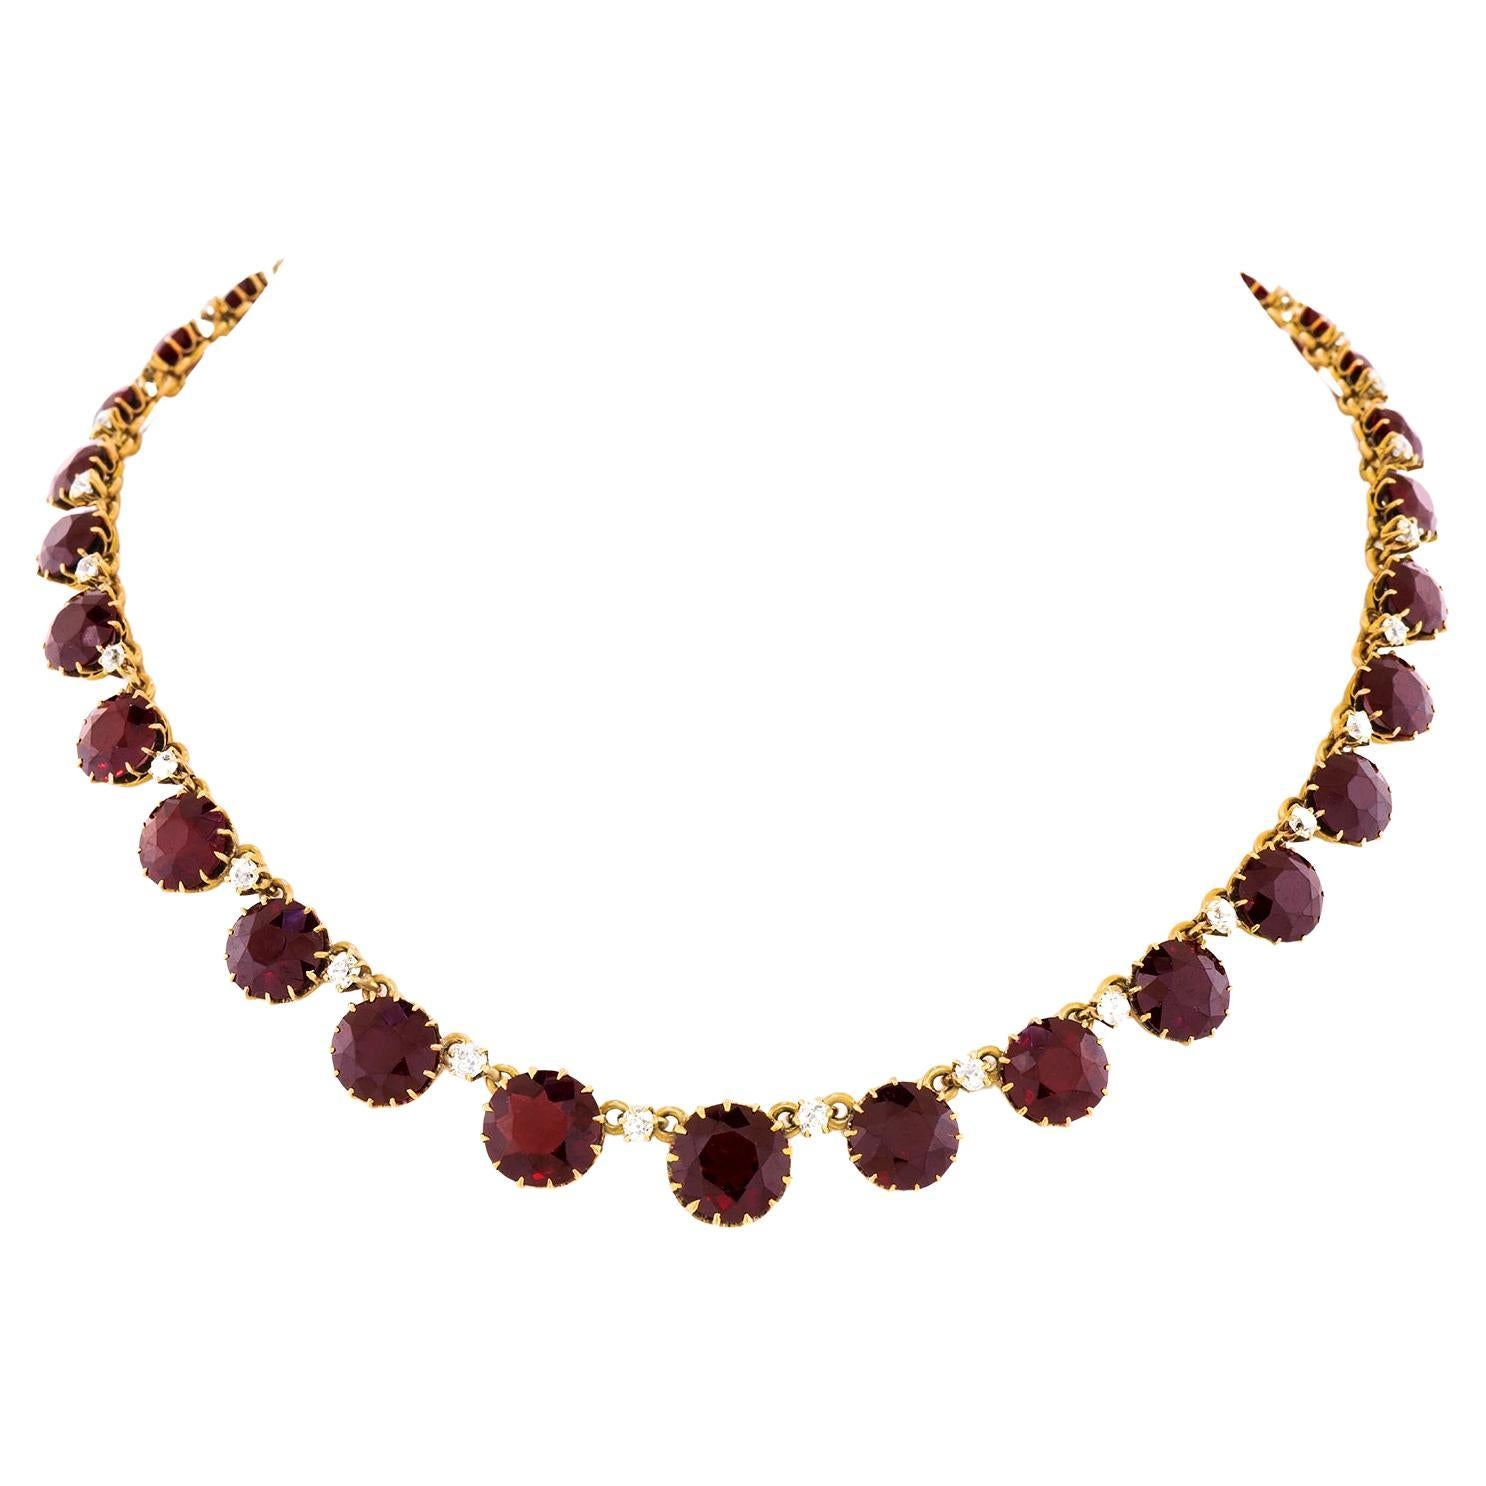 Antique Bohemian Garnet and Diamond Necklace 18k, C1880s